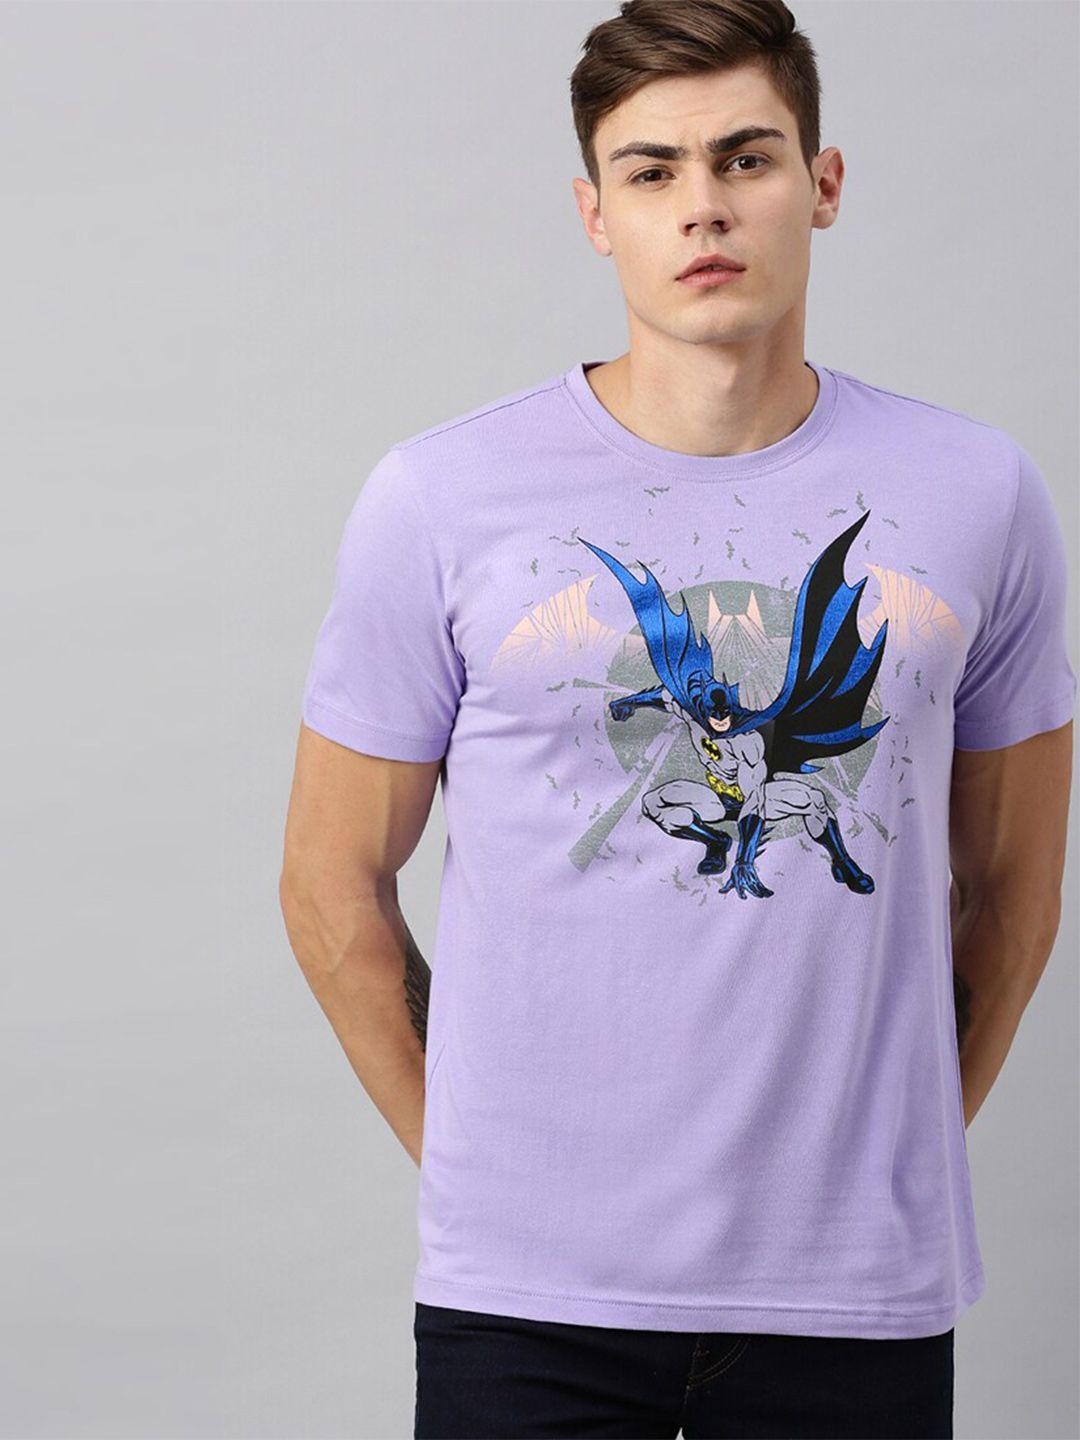 kook n keech batman men violet printed cotton t-shirt